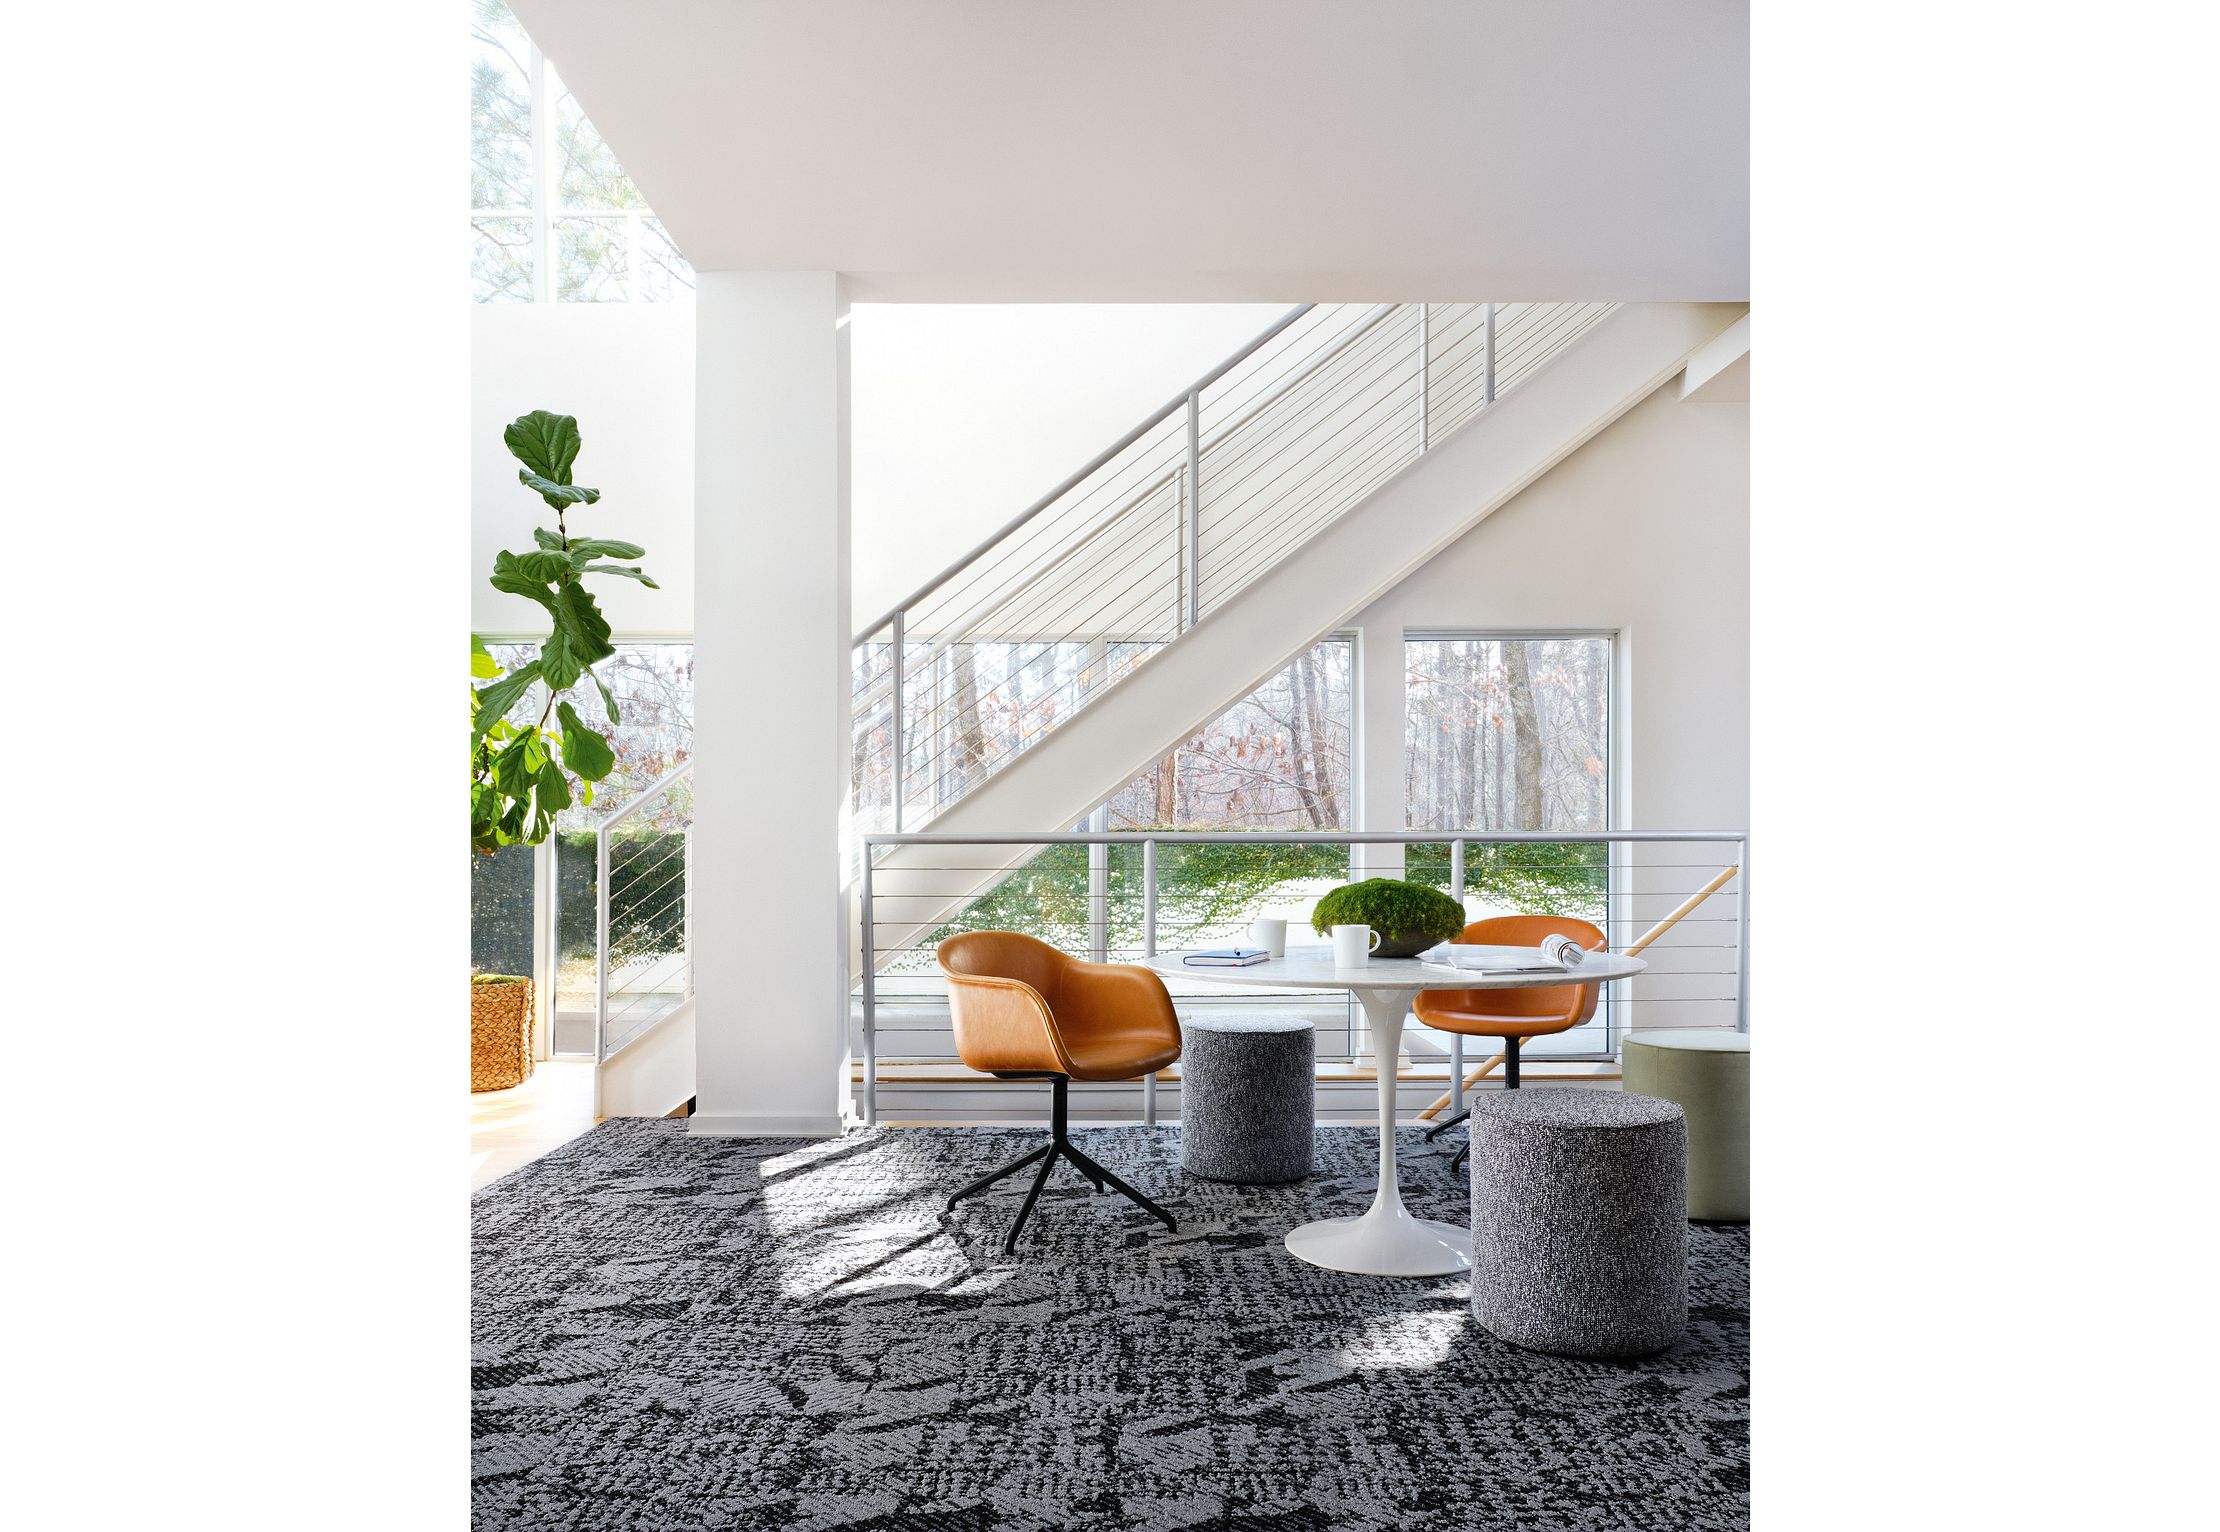 Shaw carpet tiles